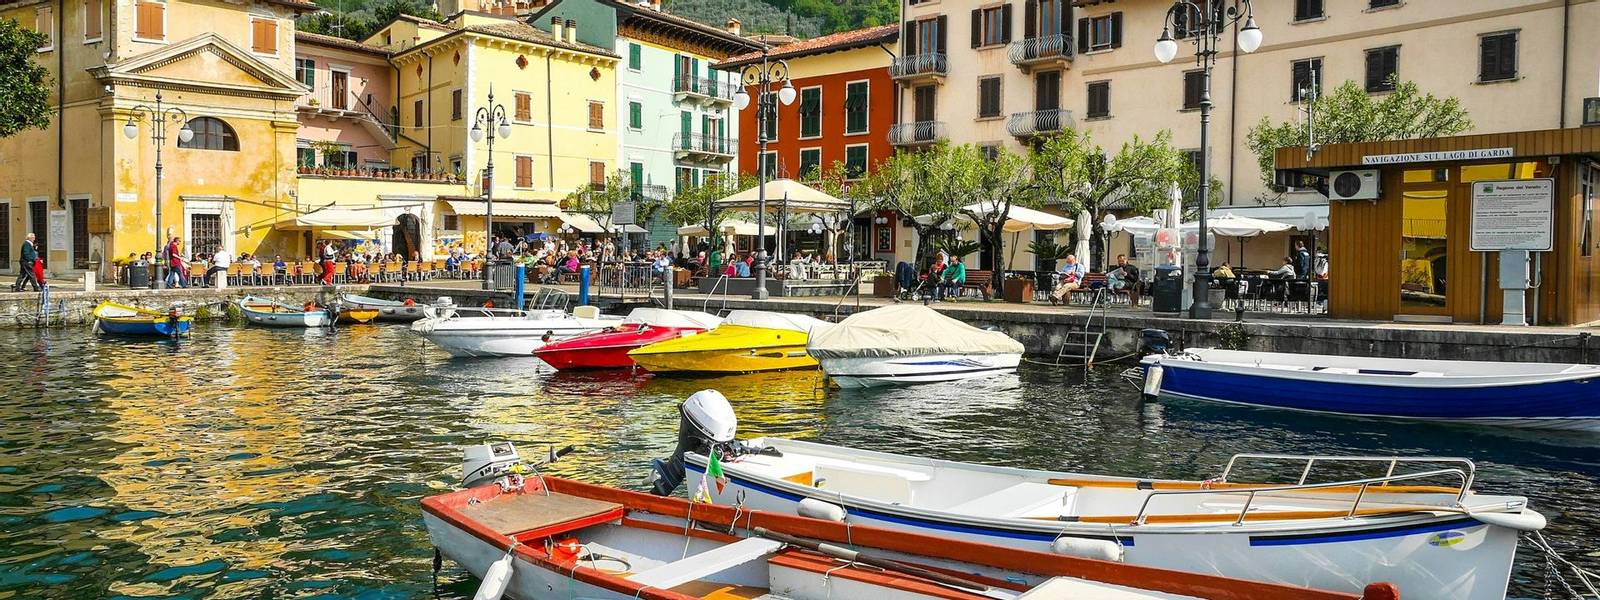 Italy - Lake Garda - Limone - AdobeStock_125469650.jpeg